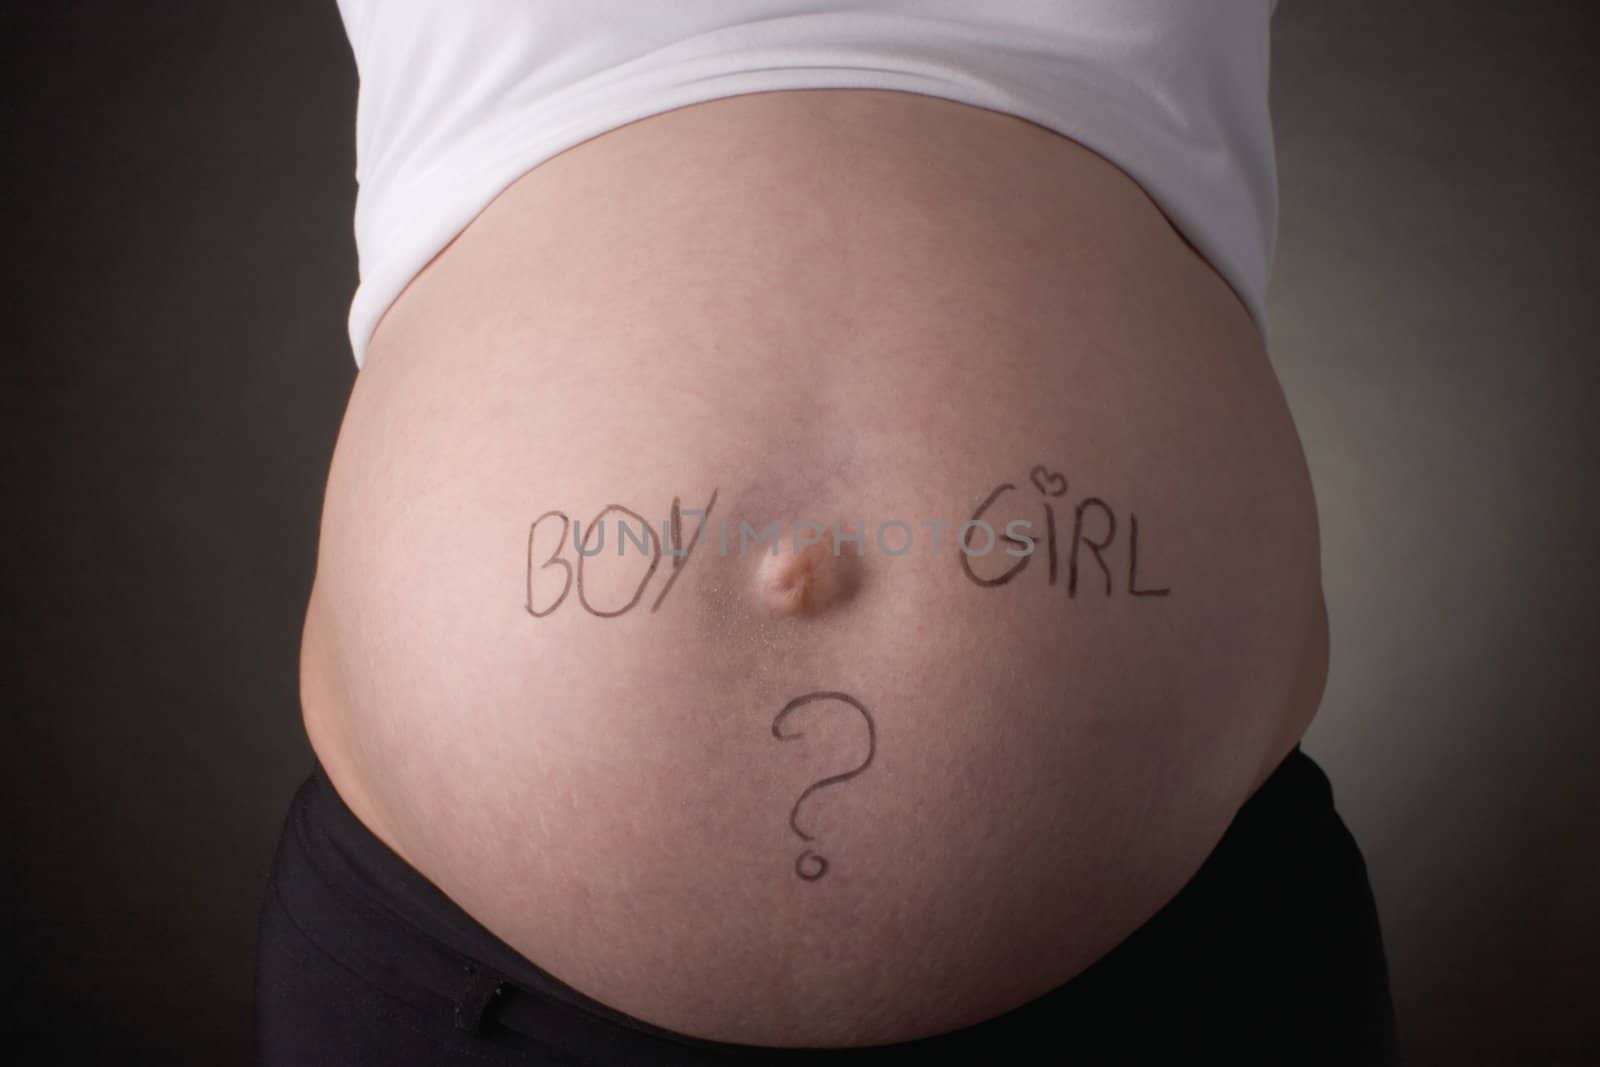 Boy or Girl belly by mypstudio